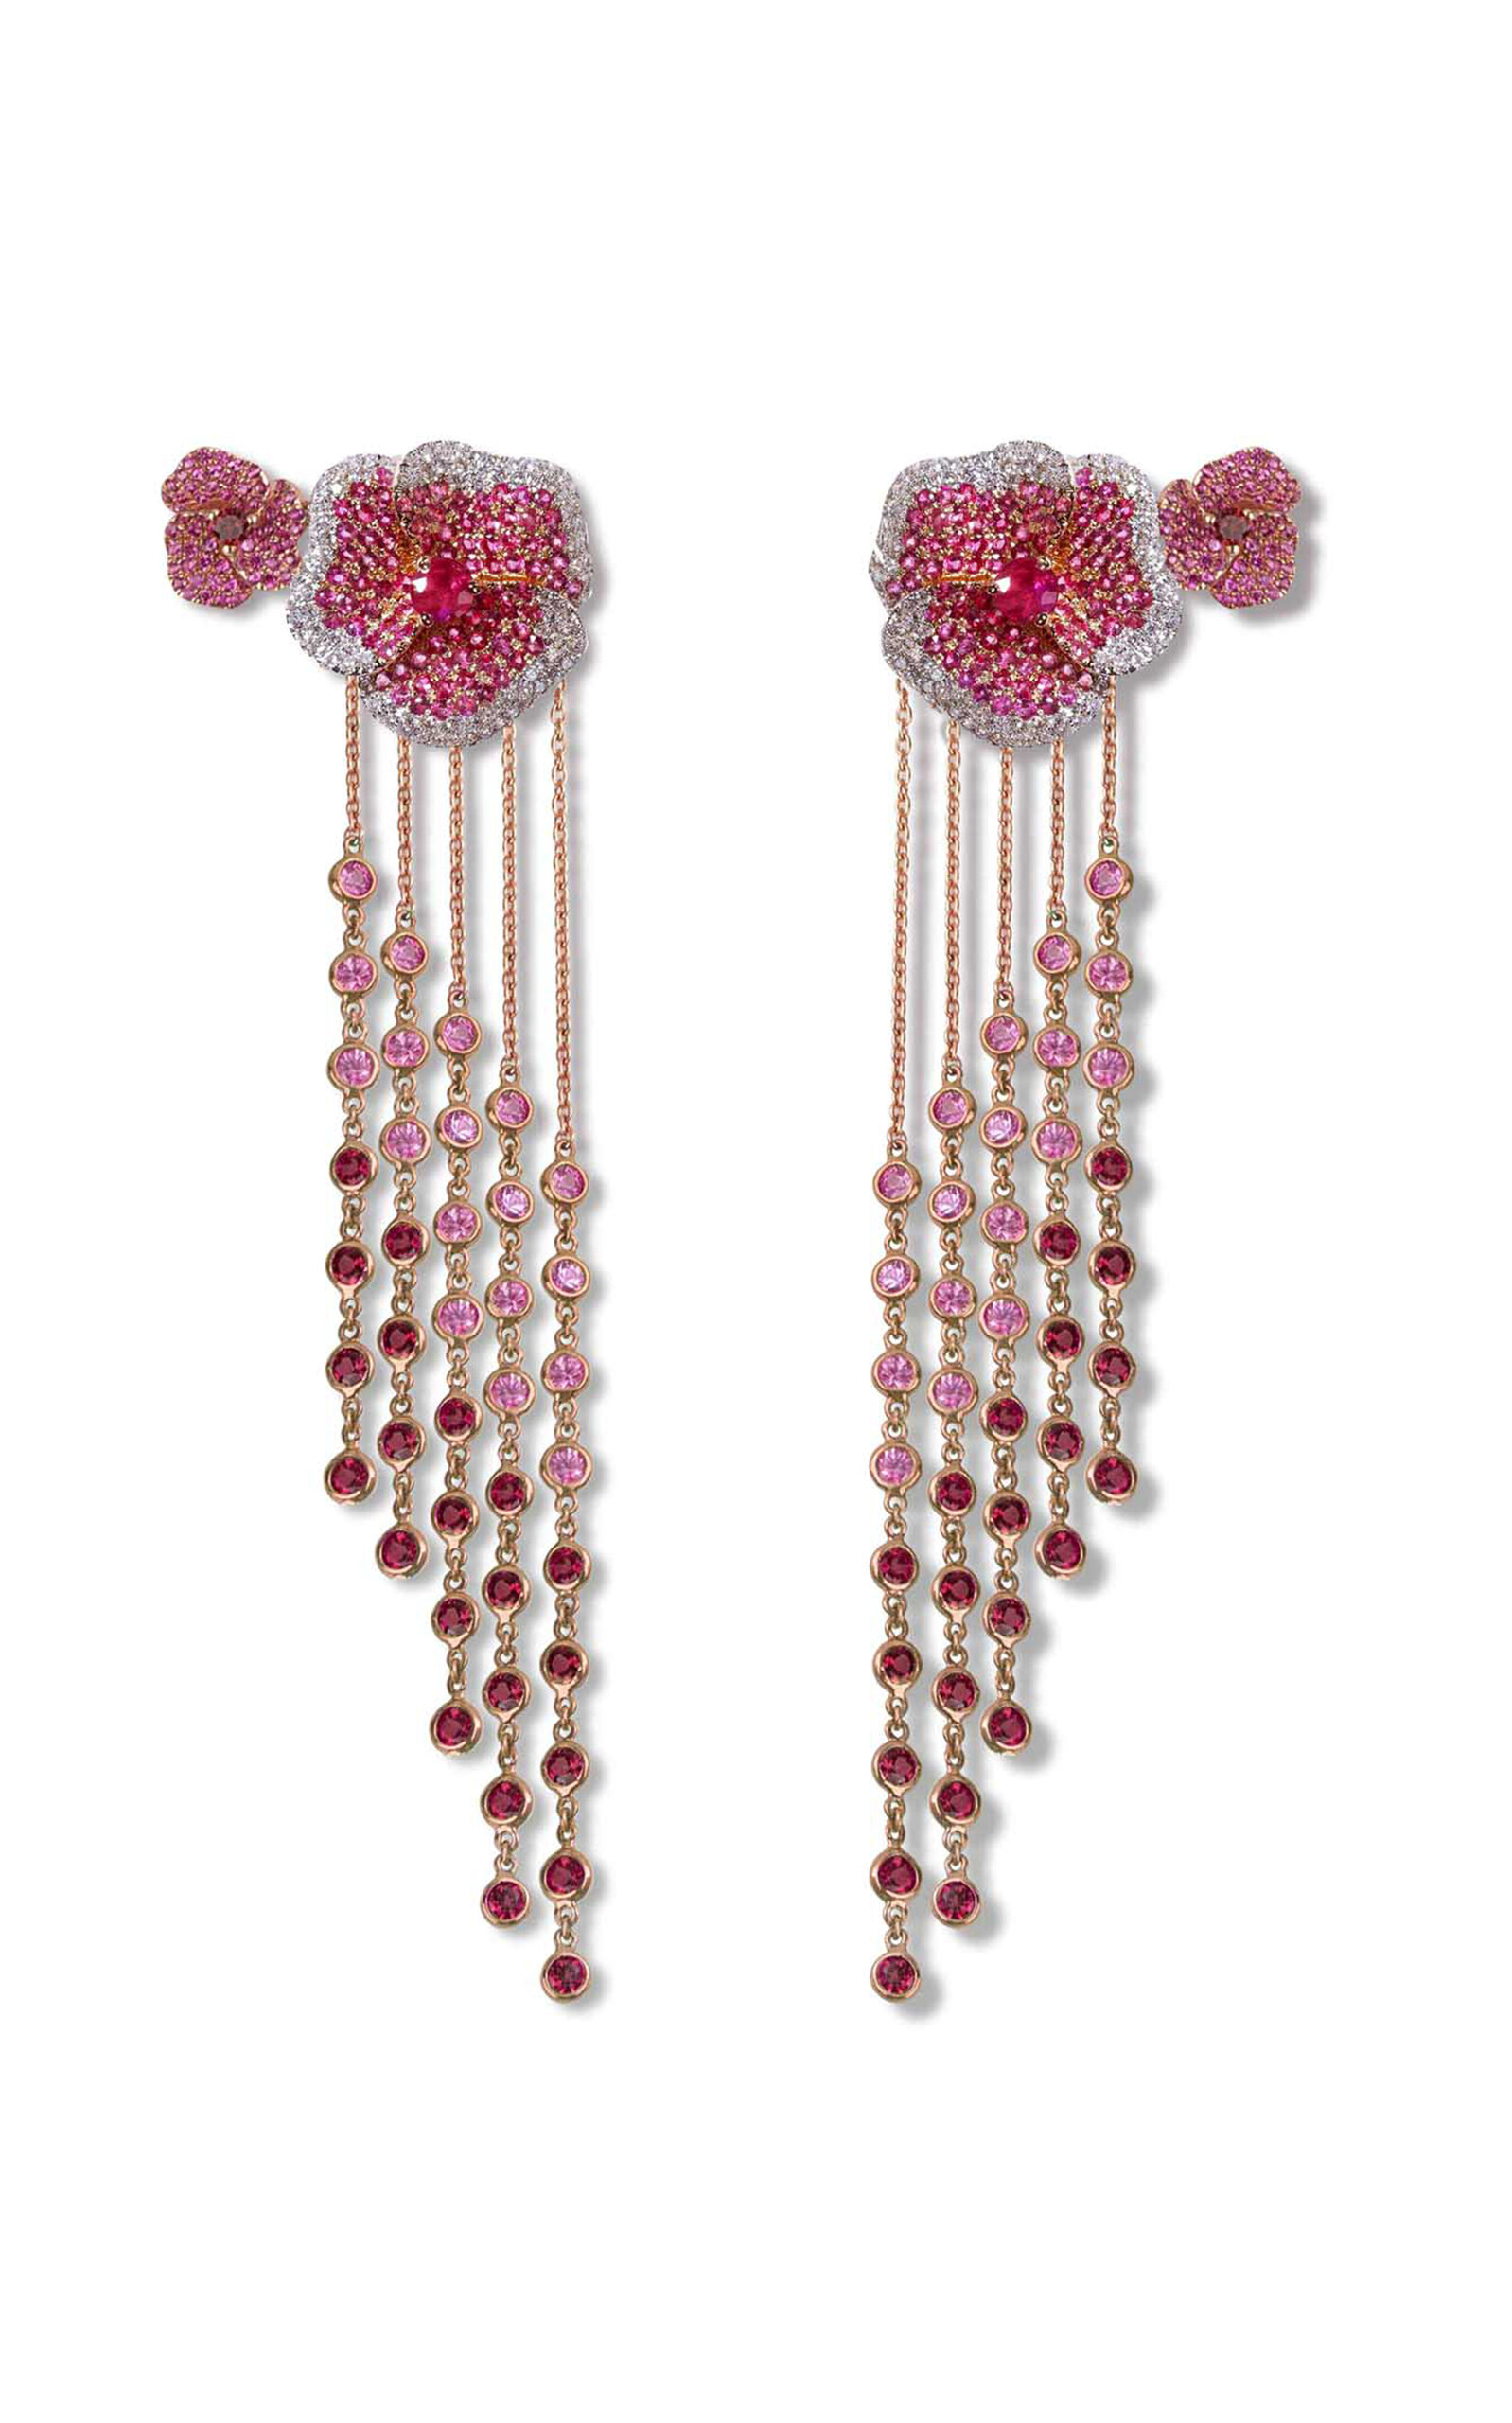 AS29 Women's One of a Kind Bloom 18K Rose Gold Multi-Stone Earrings